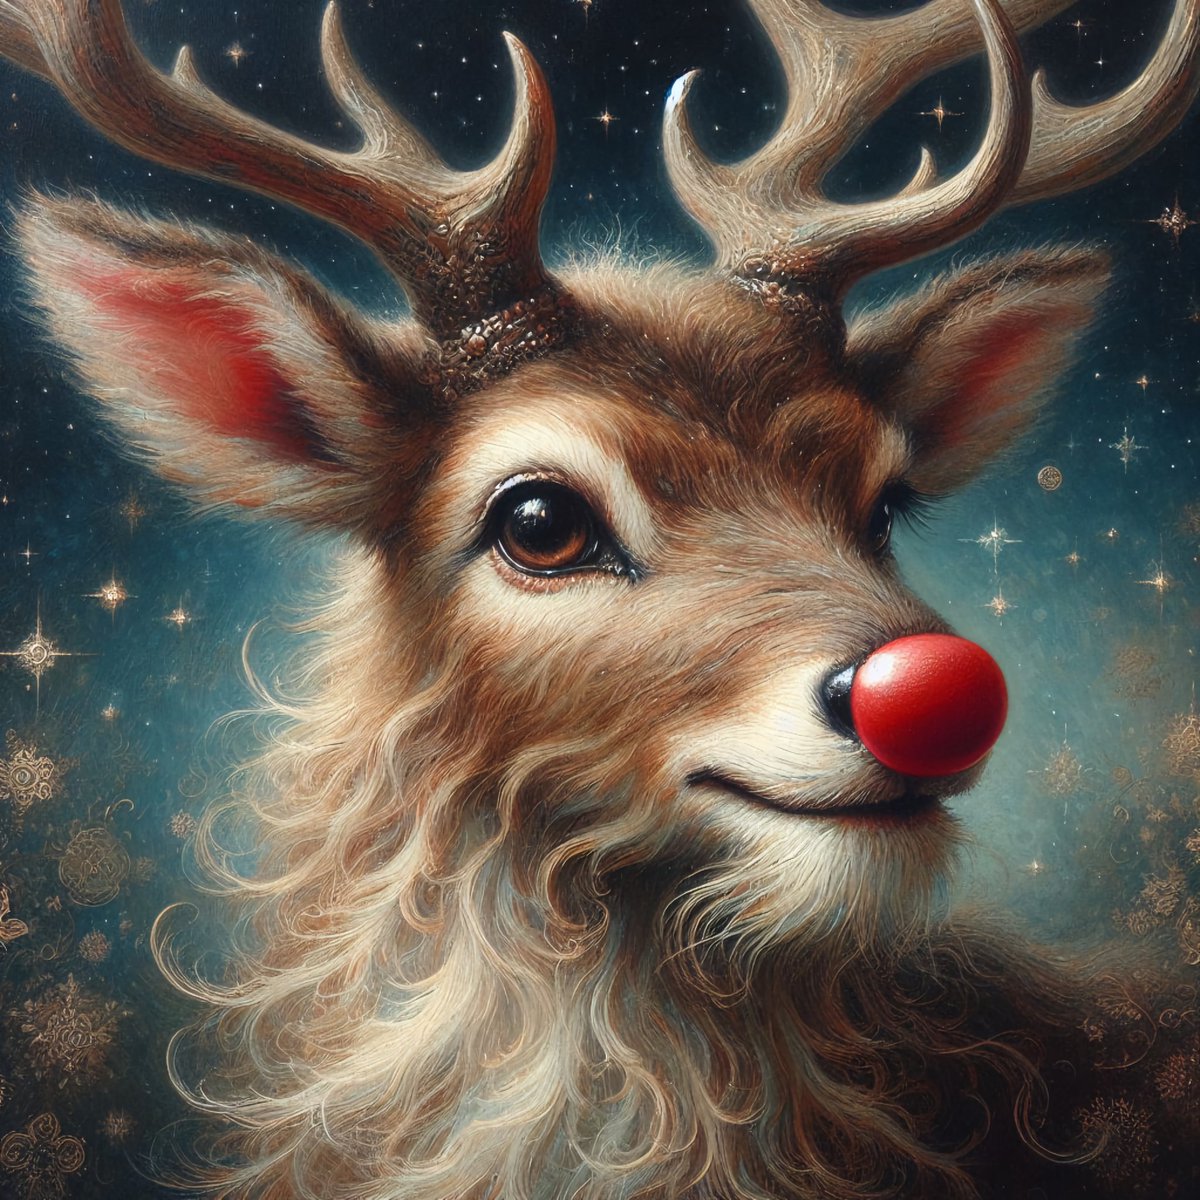 Show your Christmas spirit!
#AiArt #AIArtistCommunity #Rudolph #digitalart 
Join @FooFoo_Rabbit @AnjiPie @Cyberpopdreams @fatimazehraco